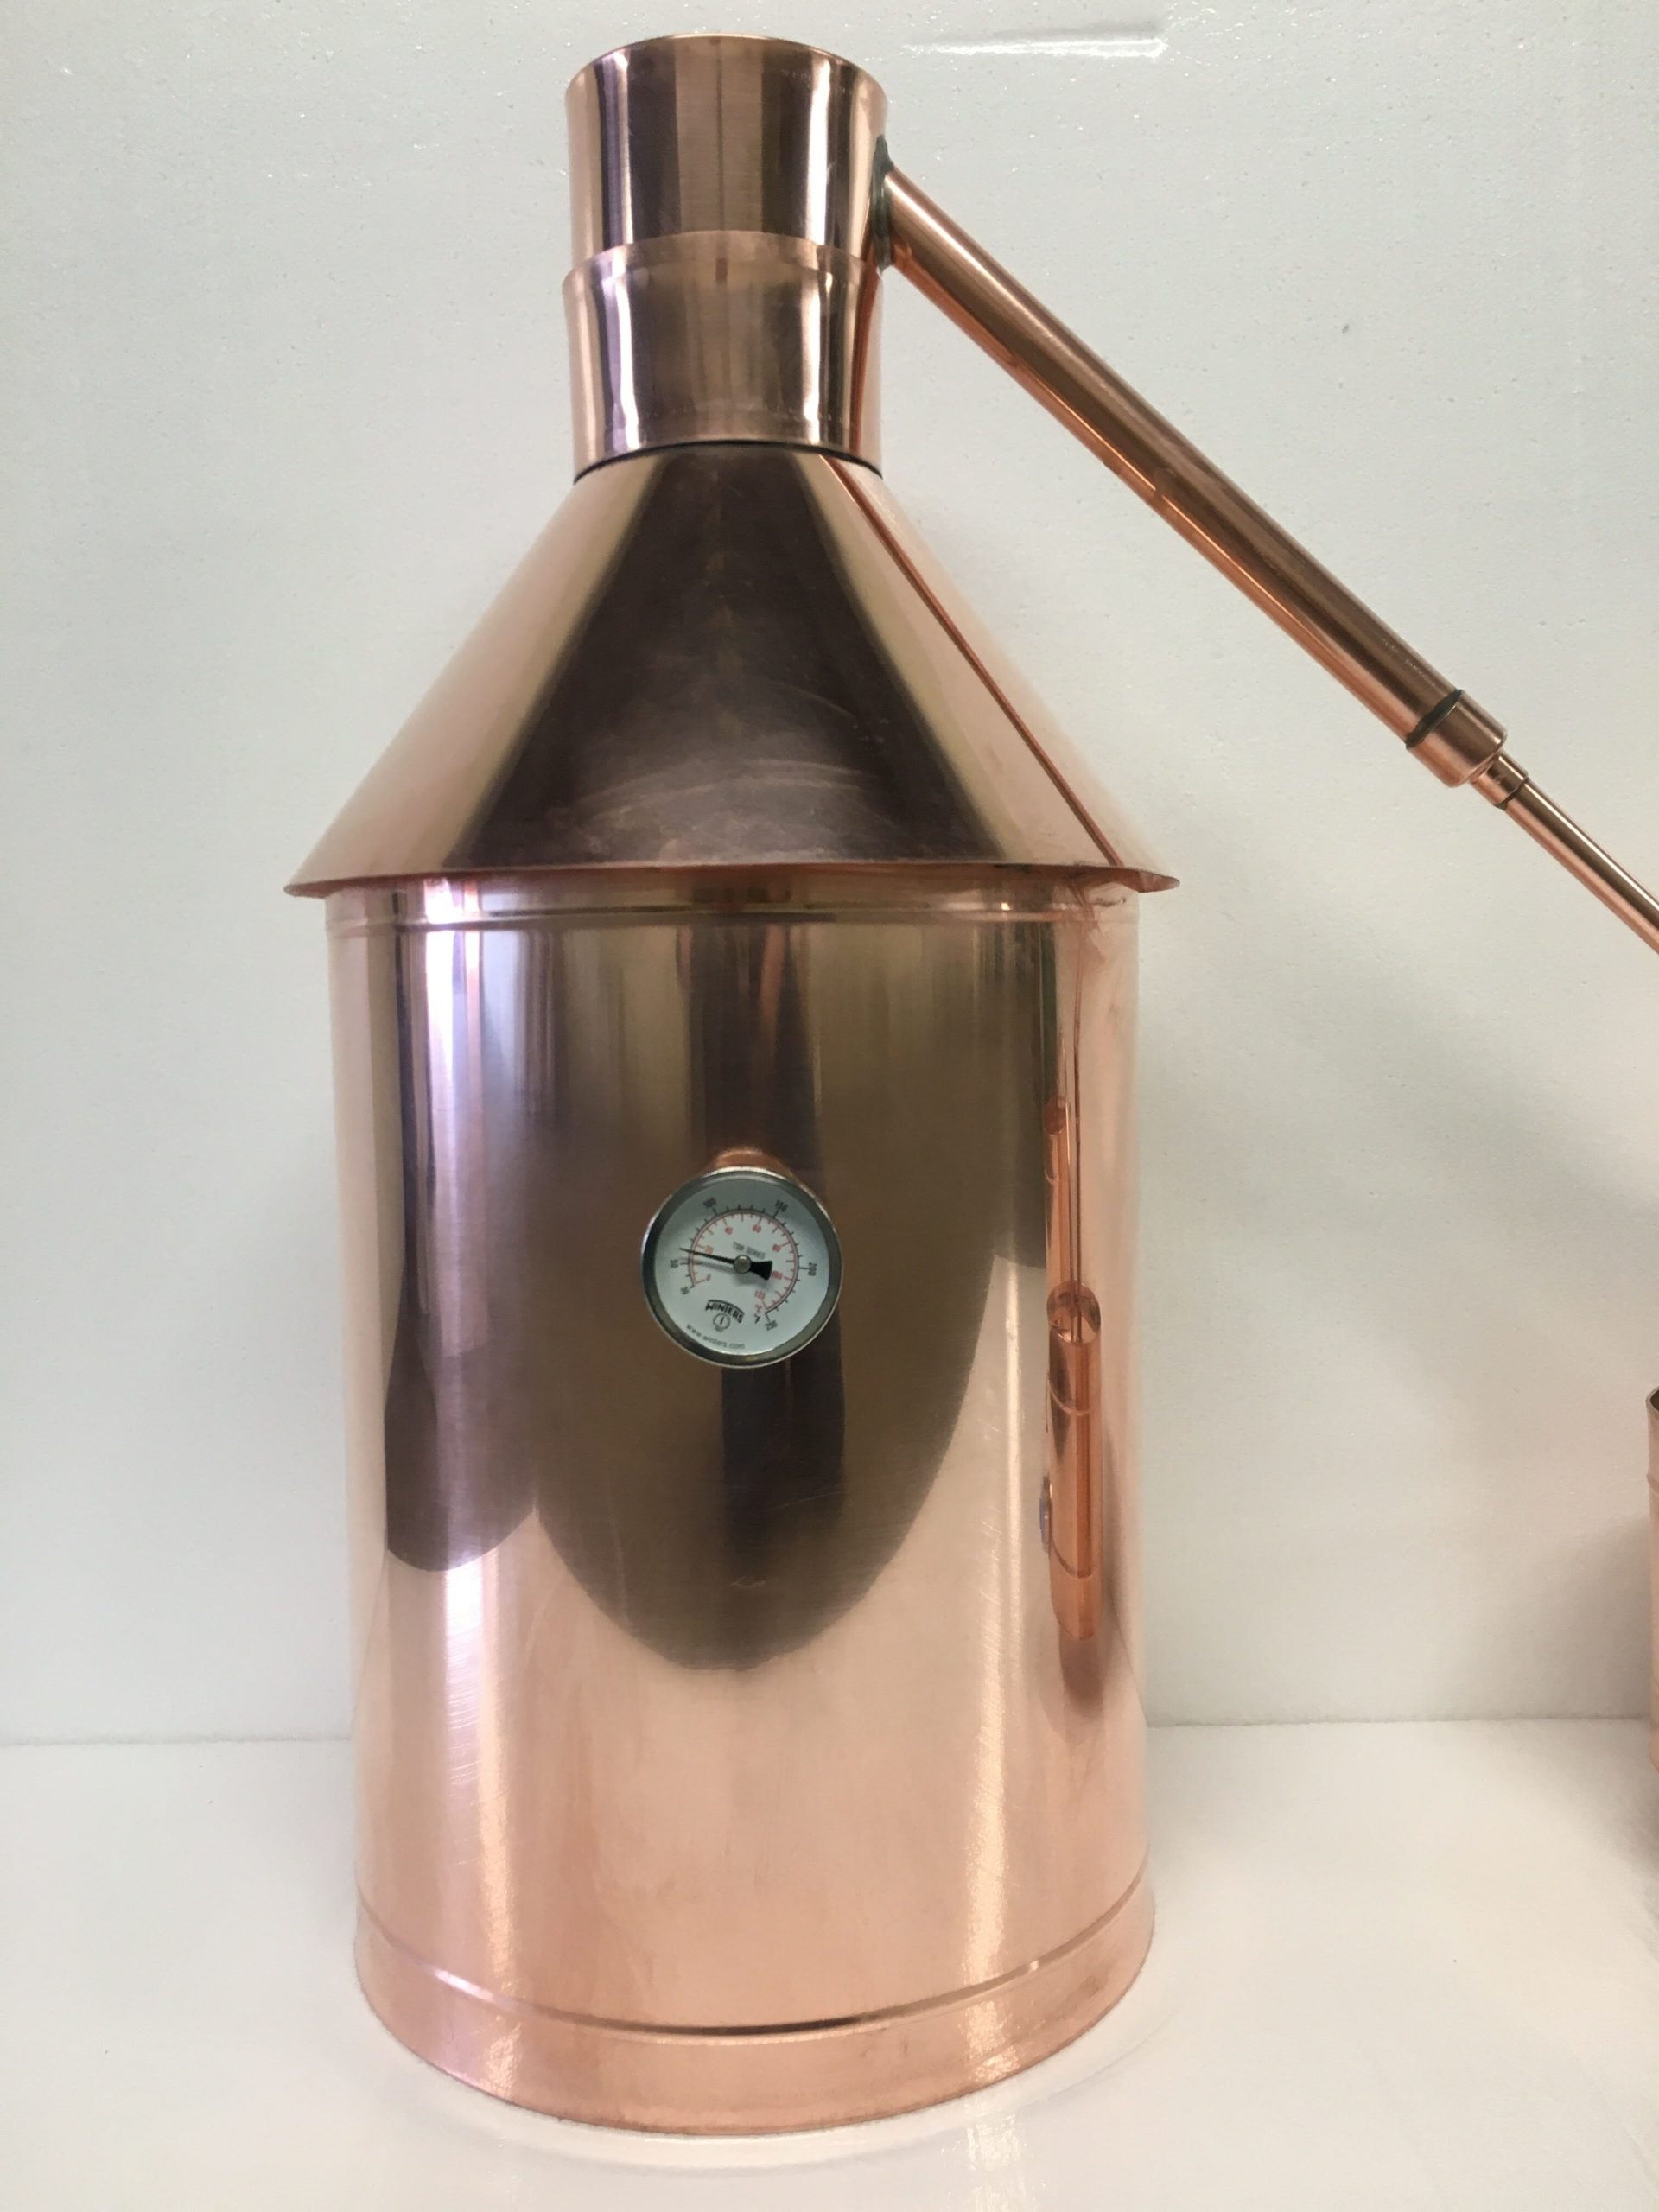  WMN_TRULYSTEP DIY 2 Gal 10 Liters Copper Alcohol